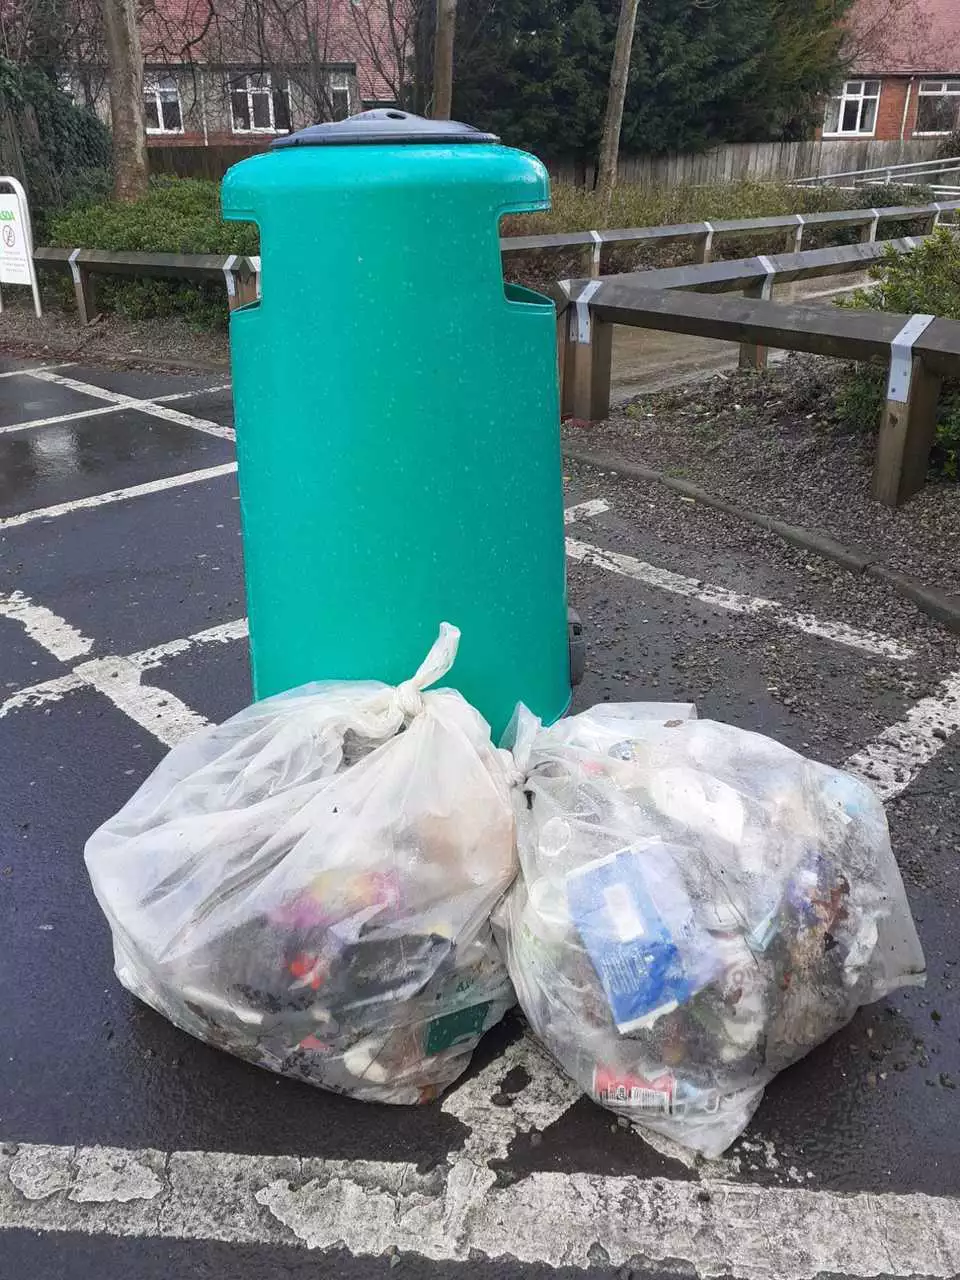 Putting rubbish in its place #bin | Asda Gosforth